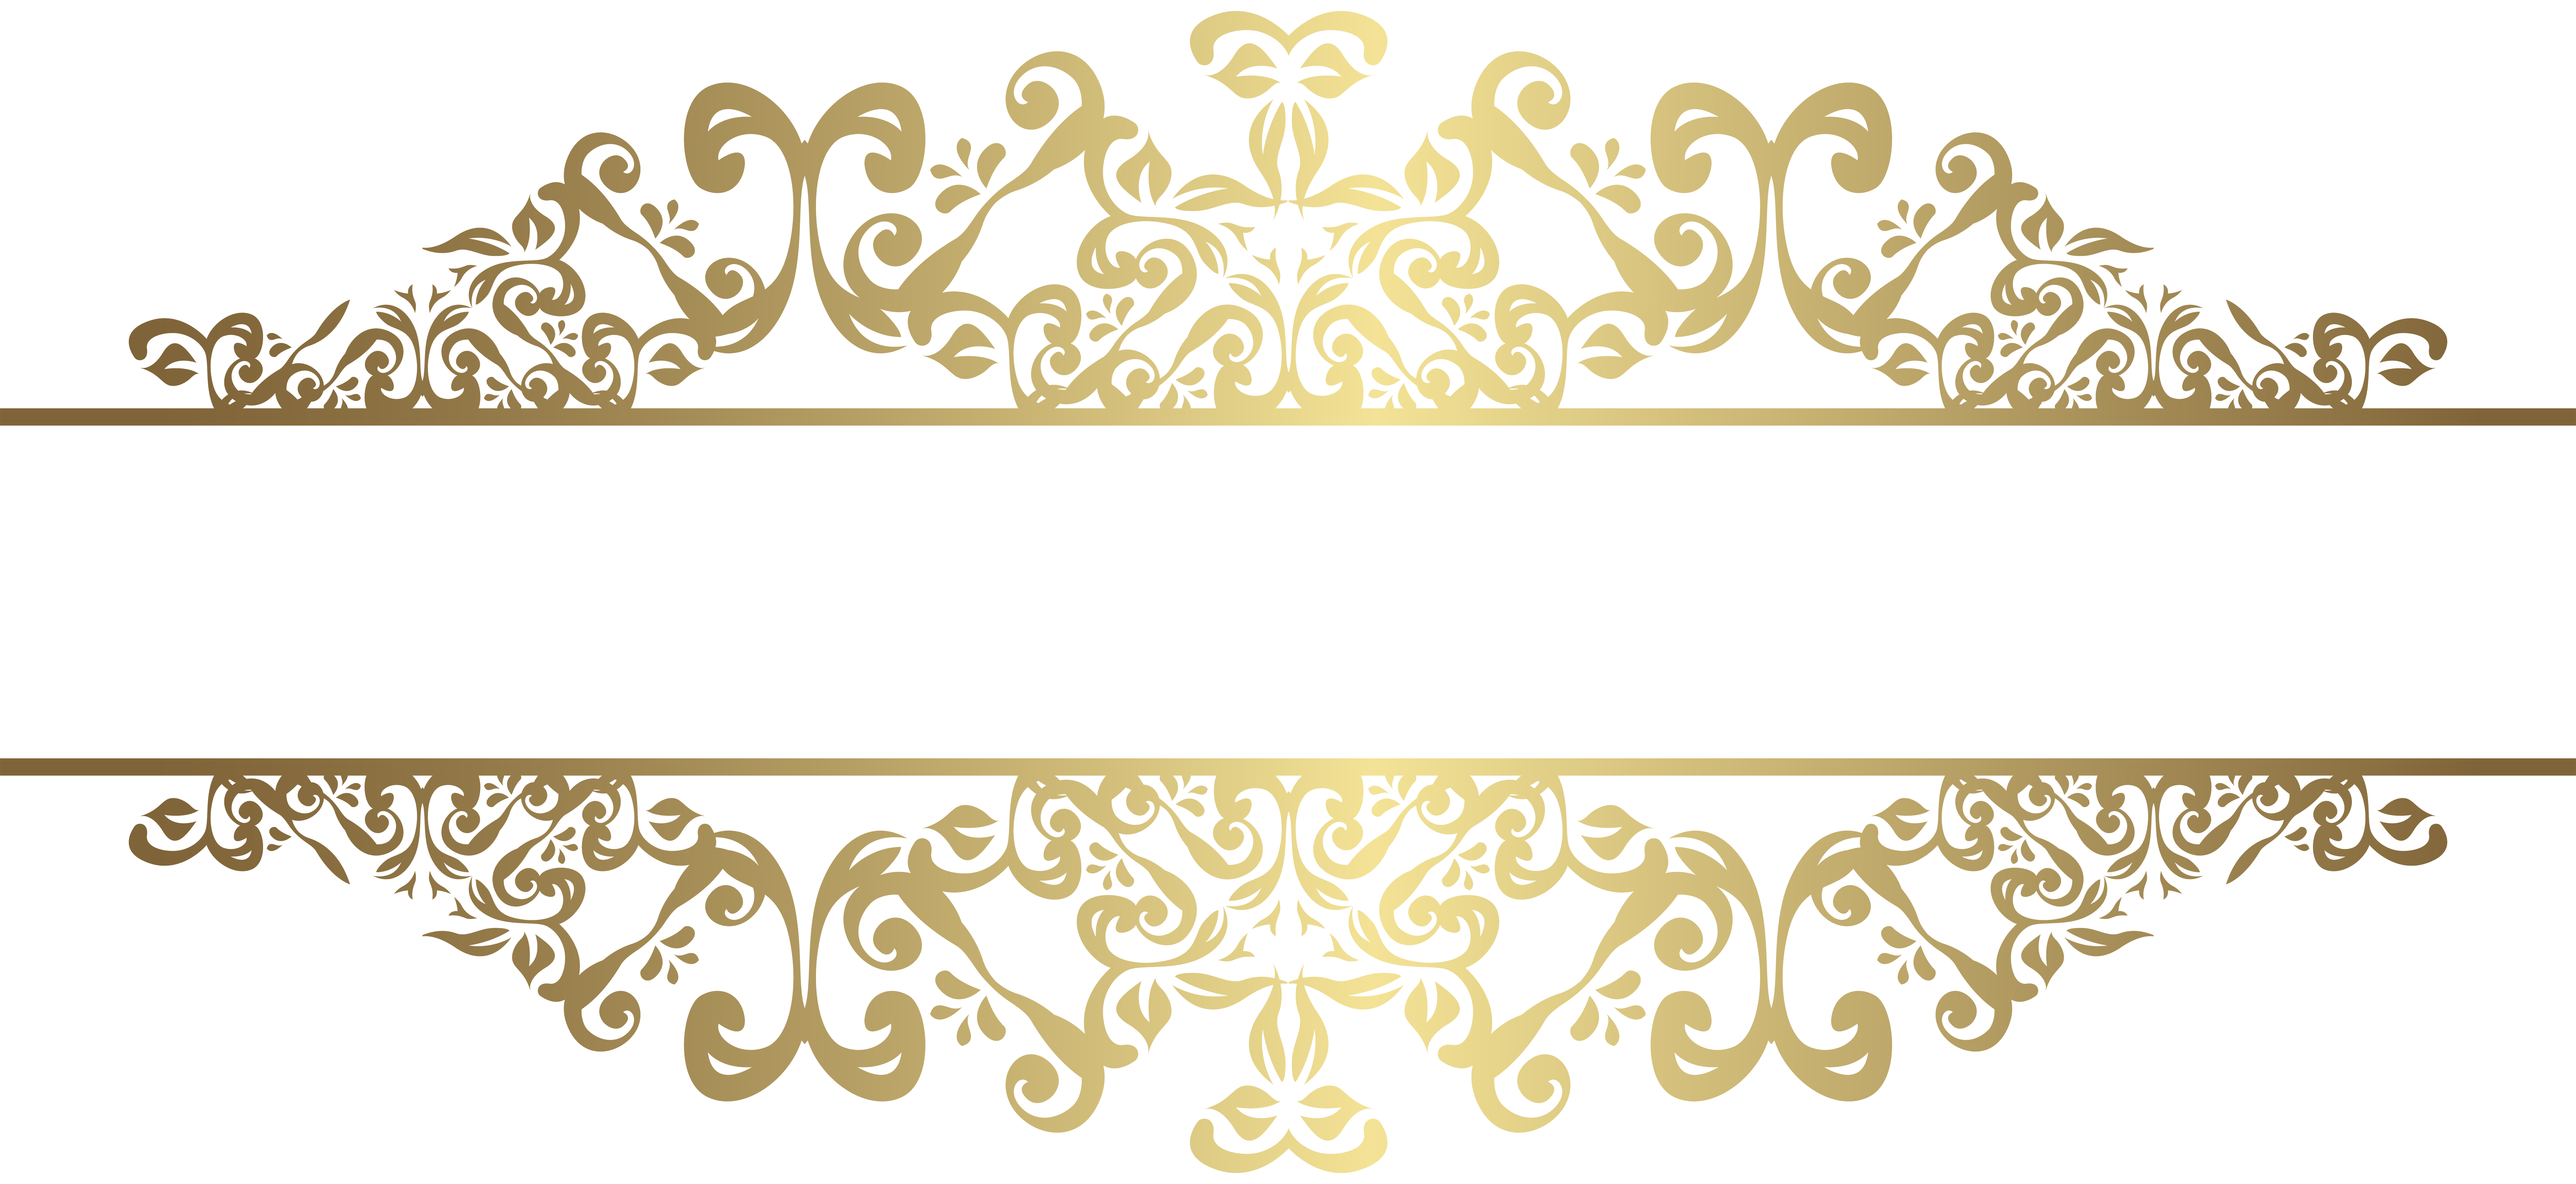 decorative clipart decorative banner